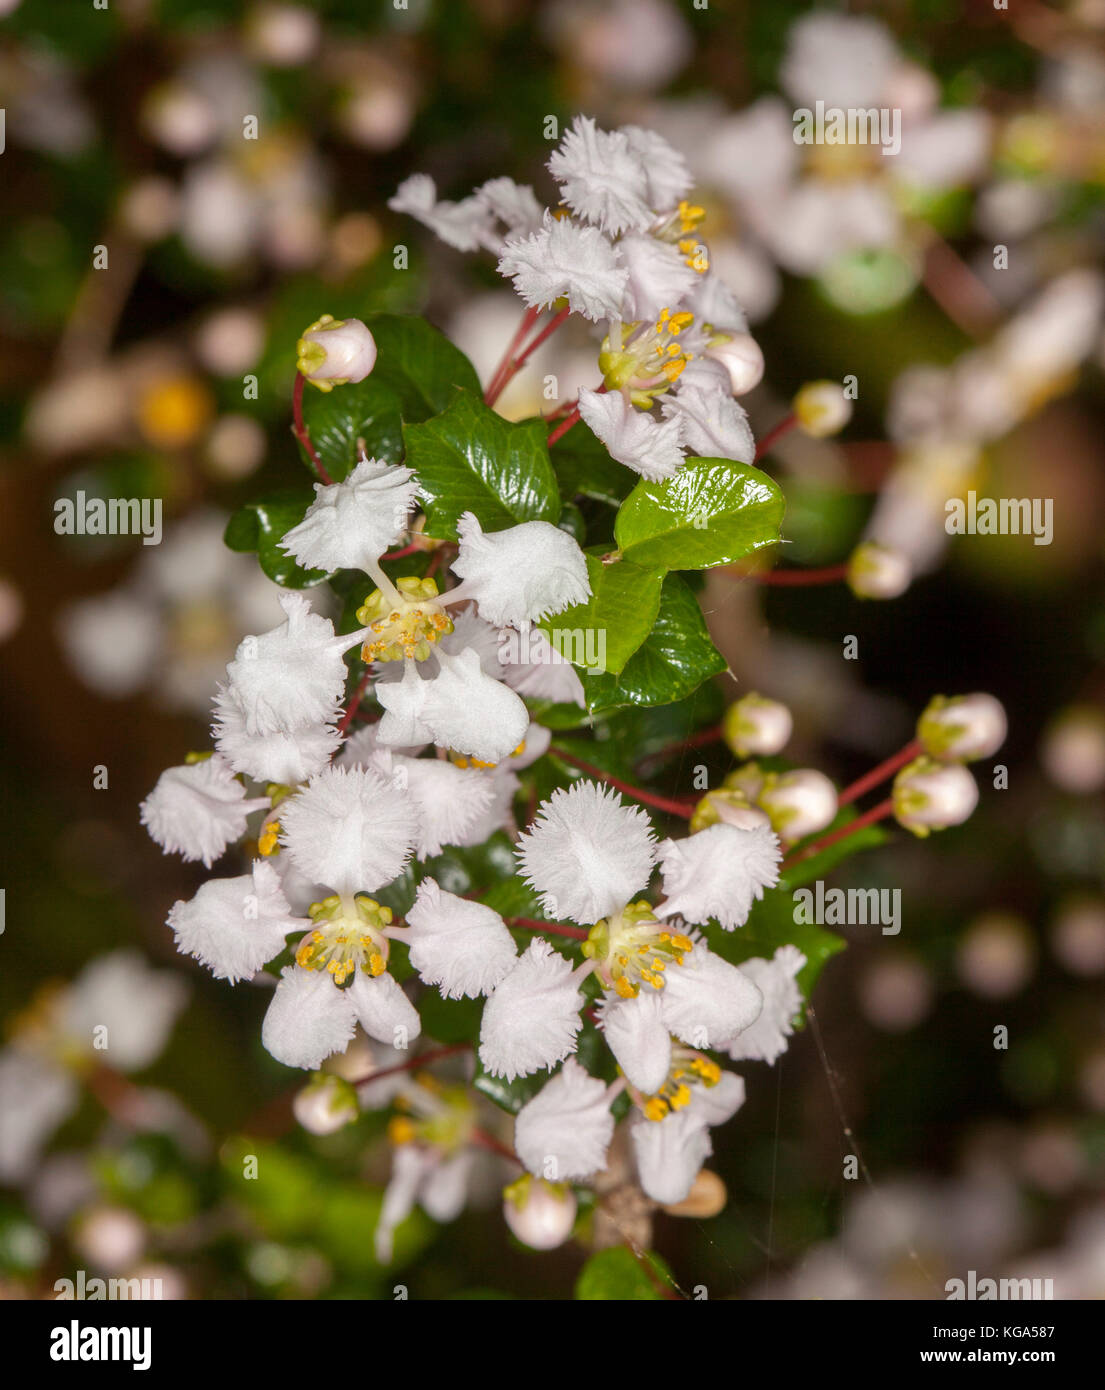 White perfumed flowers of Malphigia coccigera, Singapore holly, drought tolerant evergreen garden shrub Stock Photo